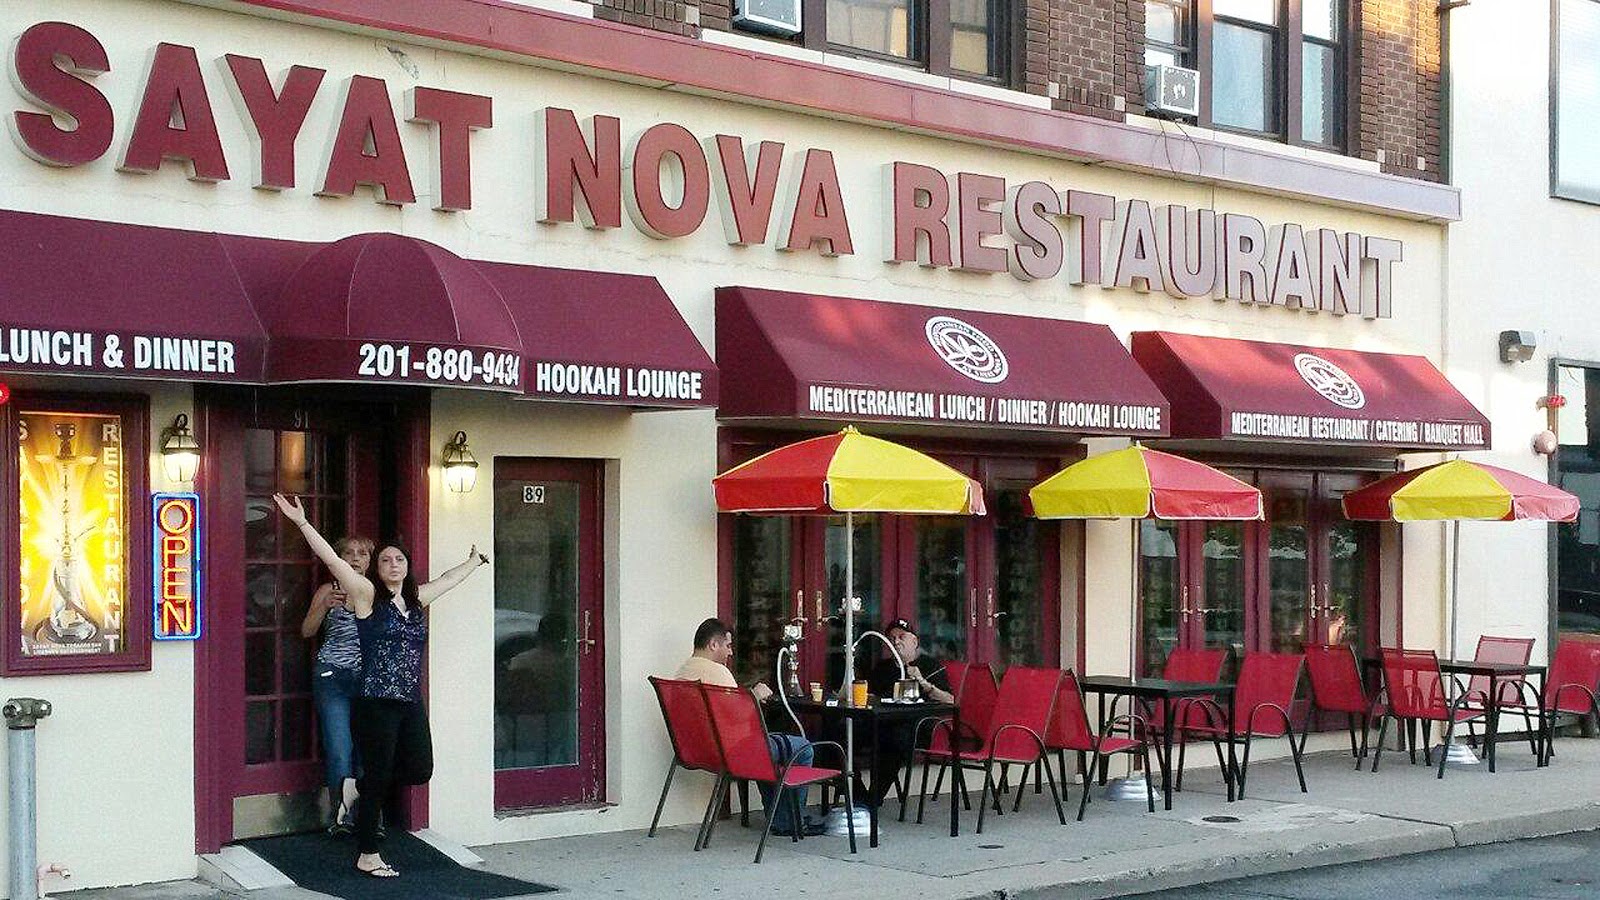 Photo of Sayat Nova Restaurant in Hackensack City, New Jersey, United States - 1 Picture of Restaurant, Food, Point of interest, Establishment